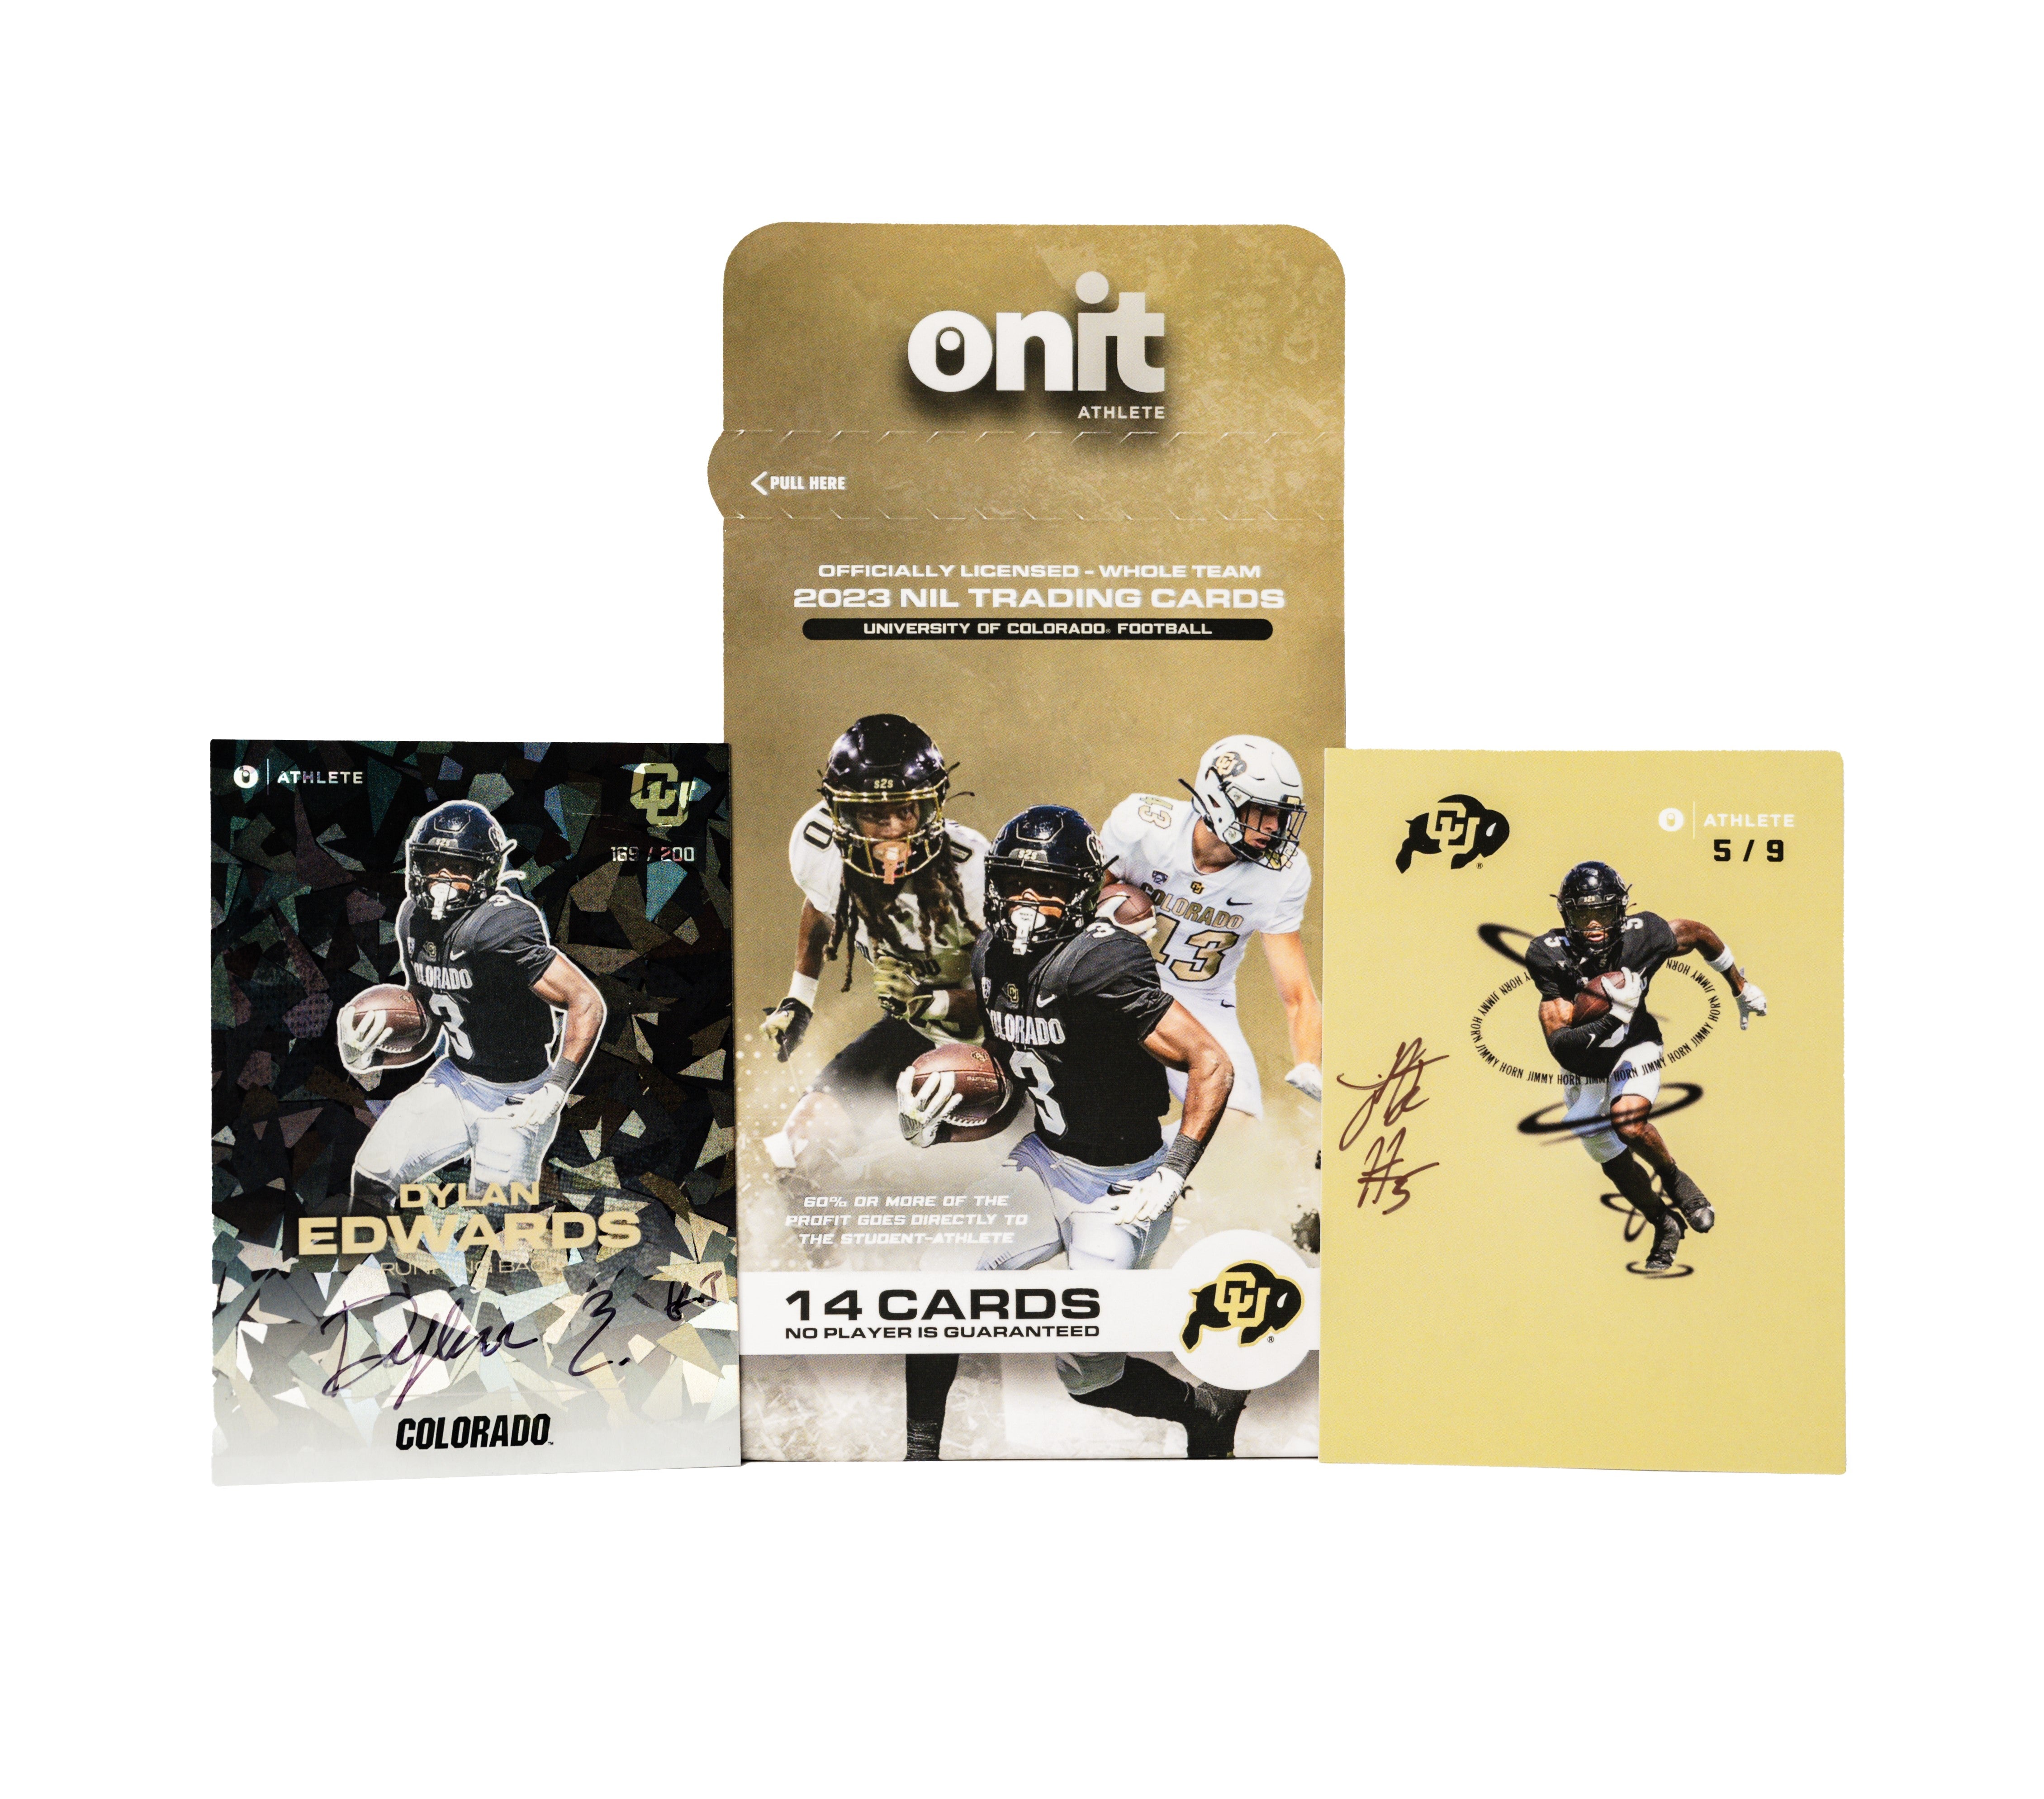 University of Colorado® NIL Football - 2023  Trading Cards - Single Pack